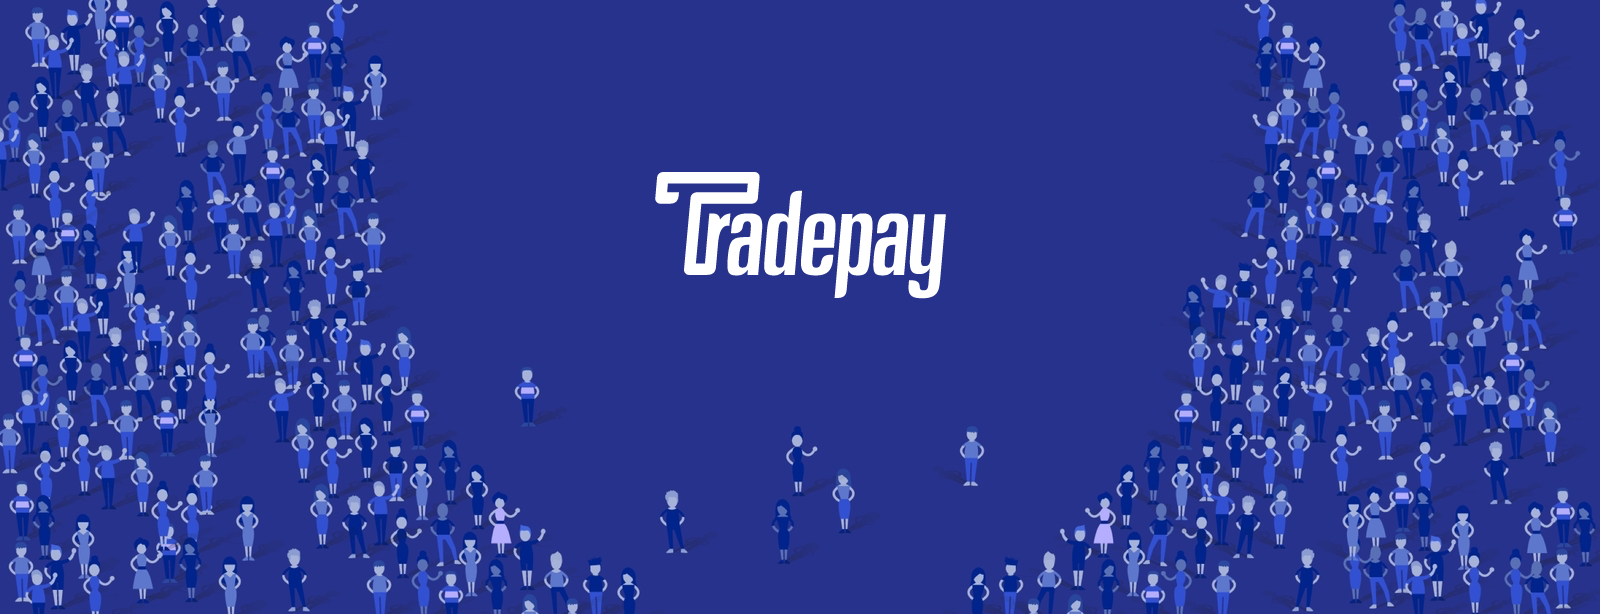 Tradepay Tips